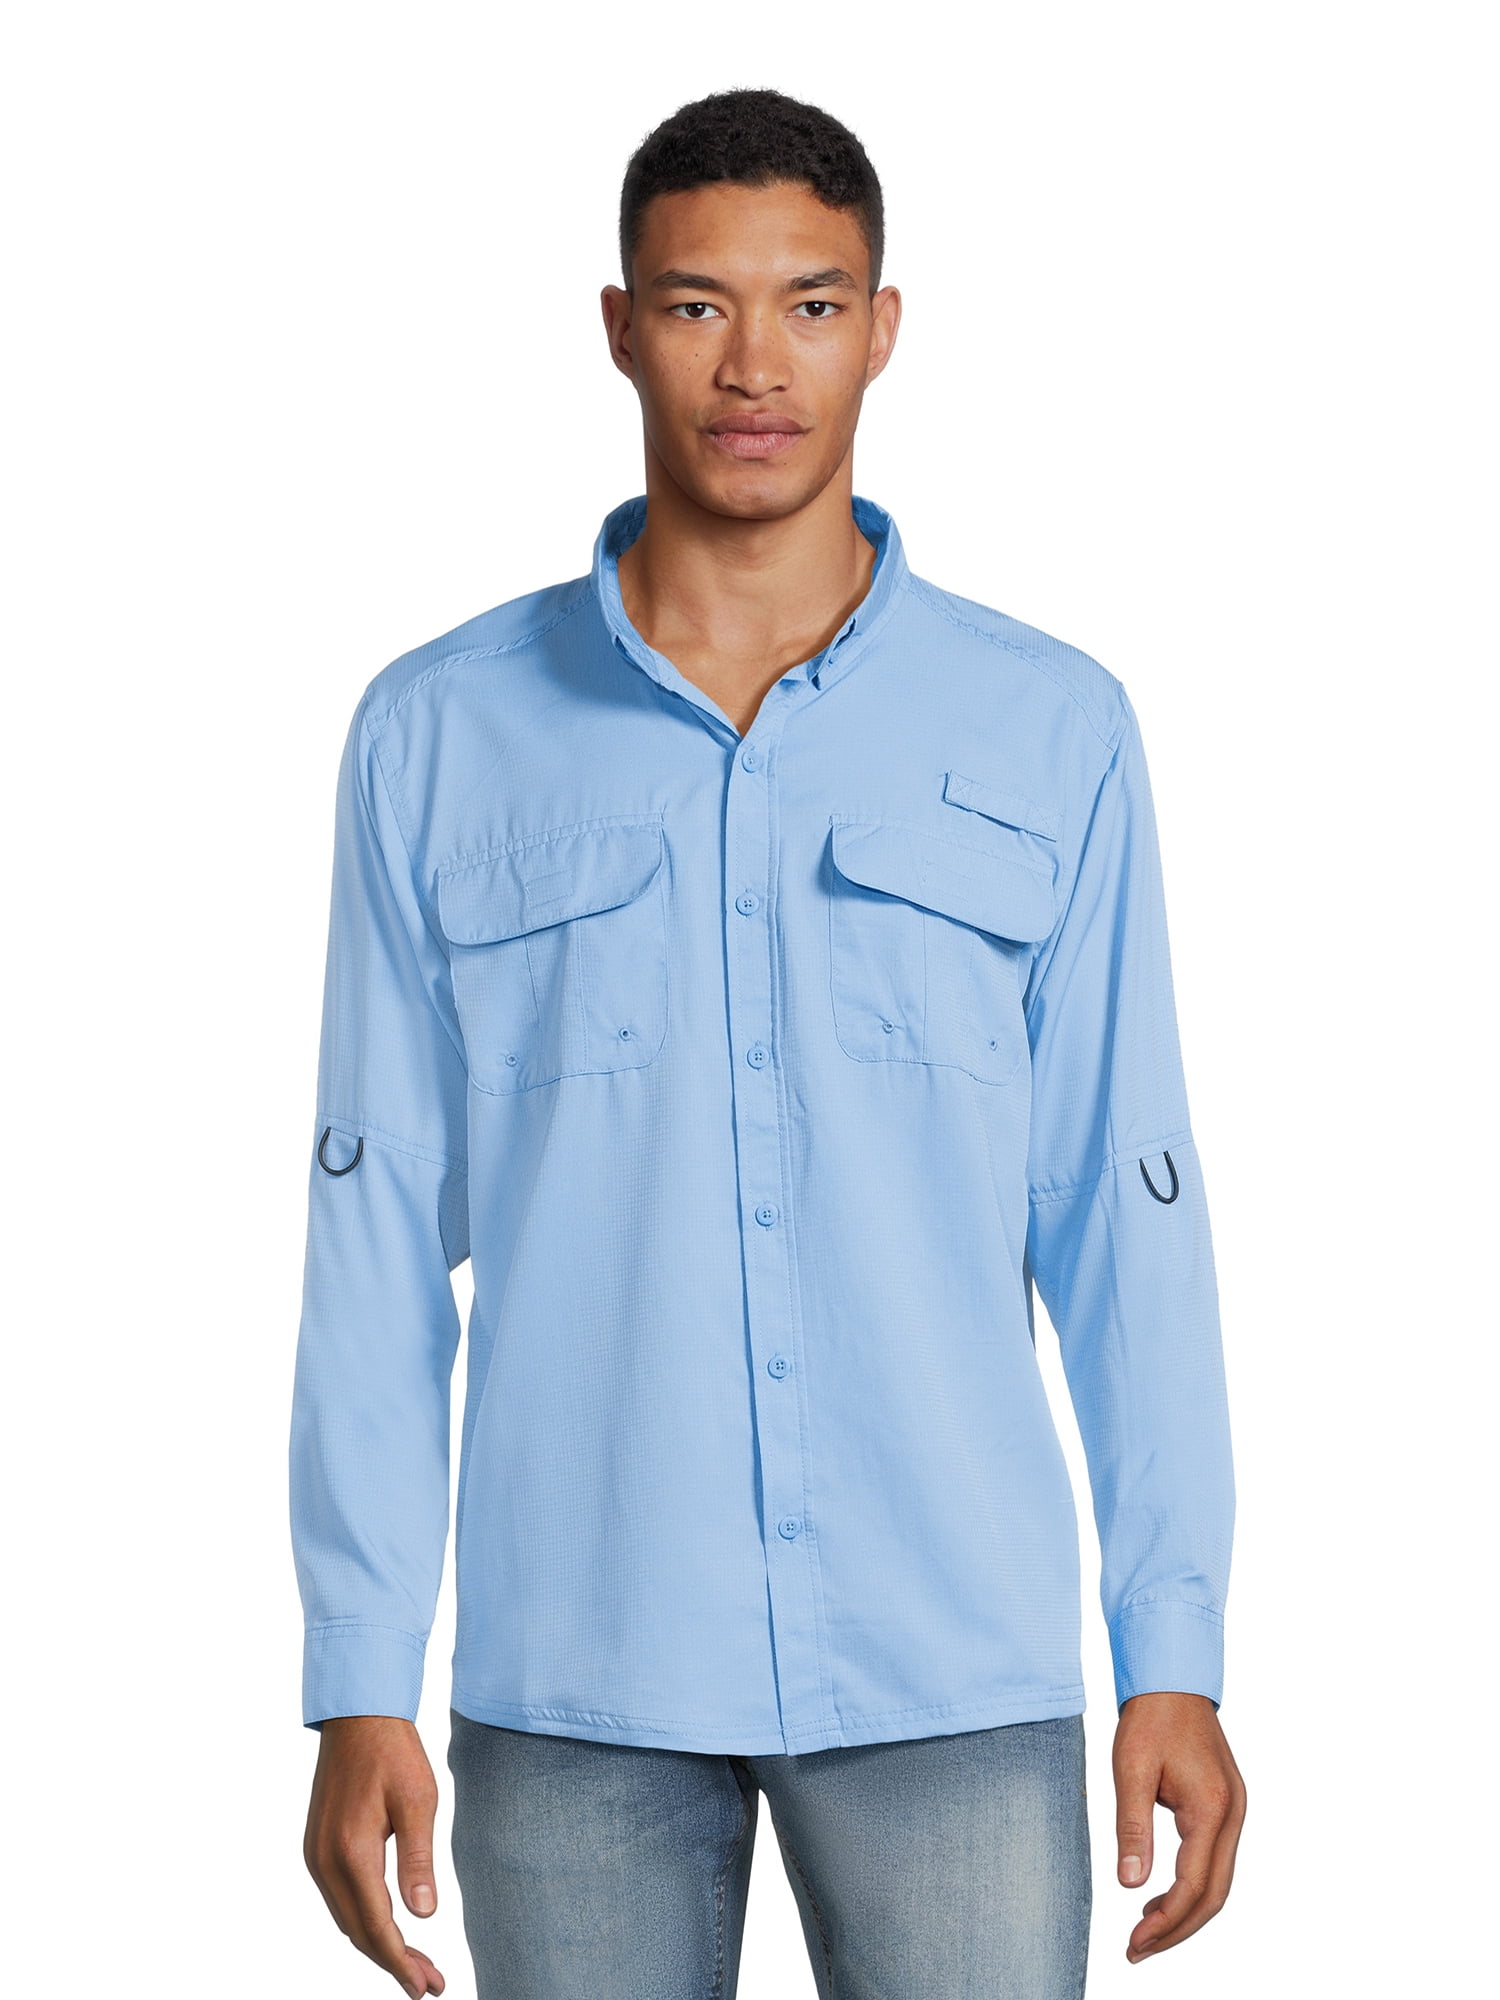 Burnside Men's Long Sleeve Utility Fishing Shirt, Sizes M-2xl, Size: Medium, Blue